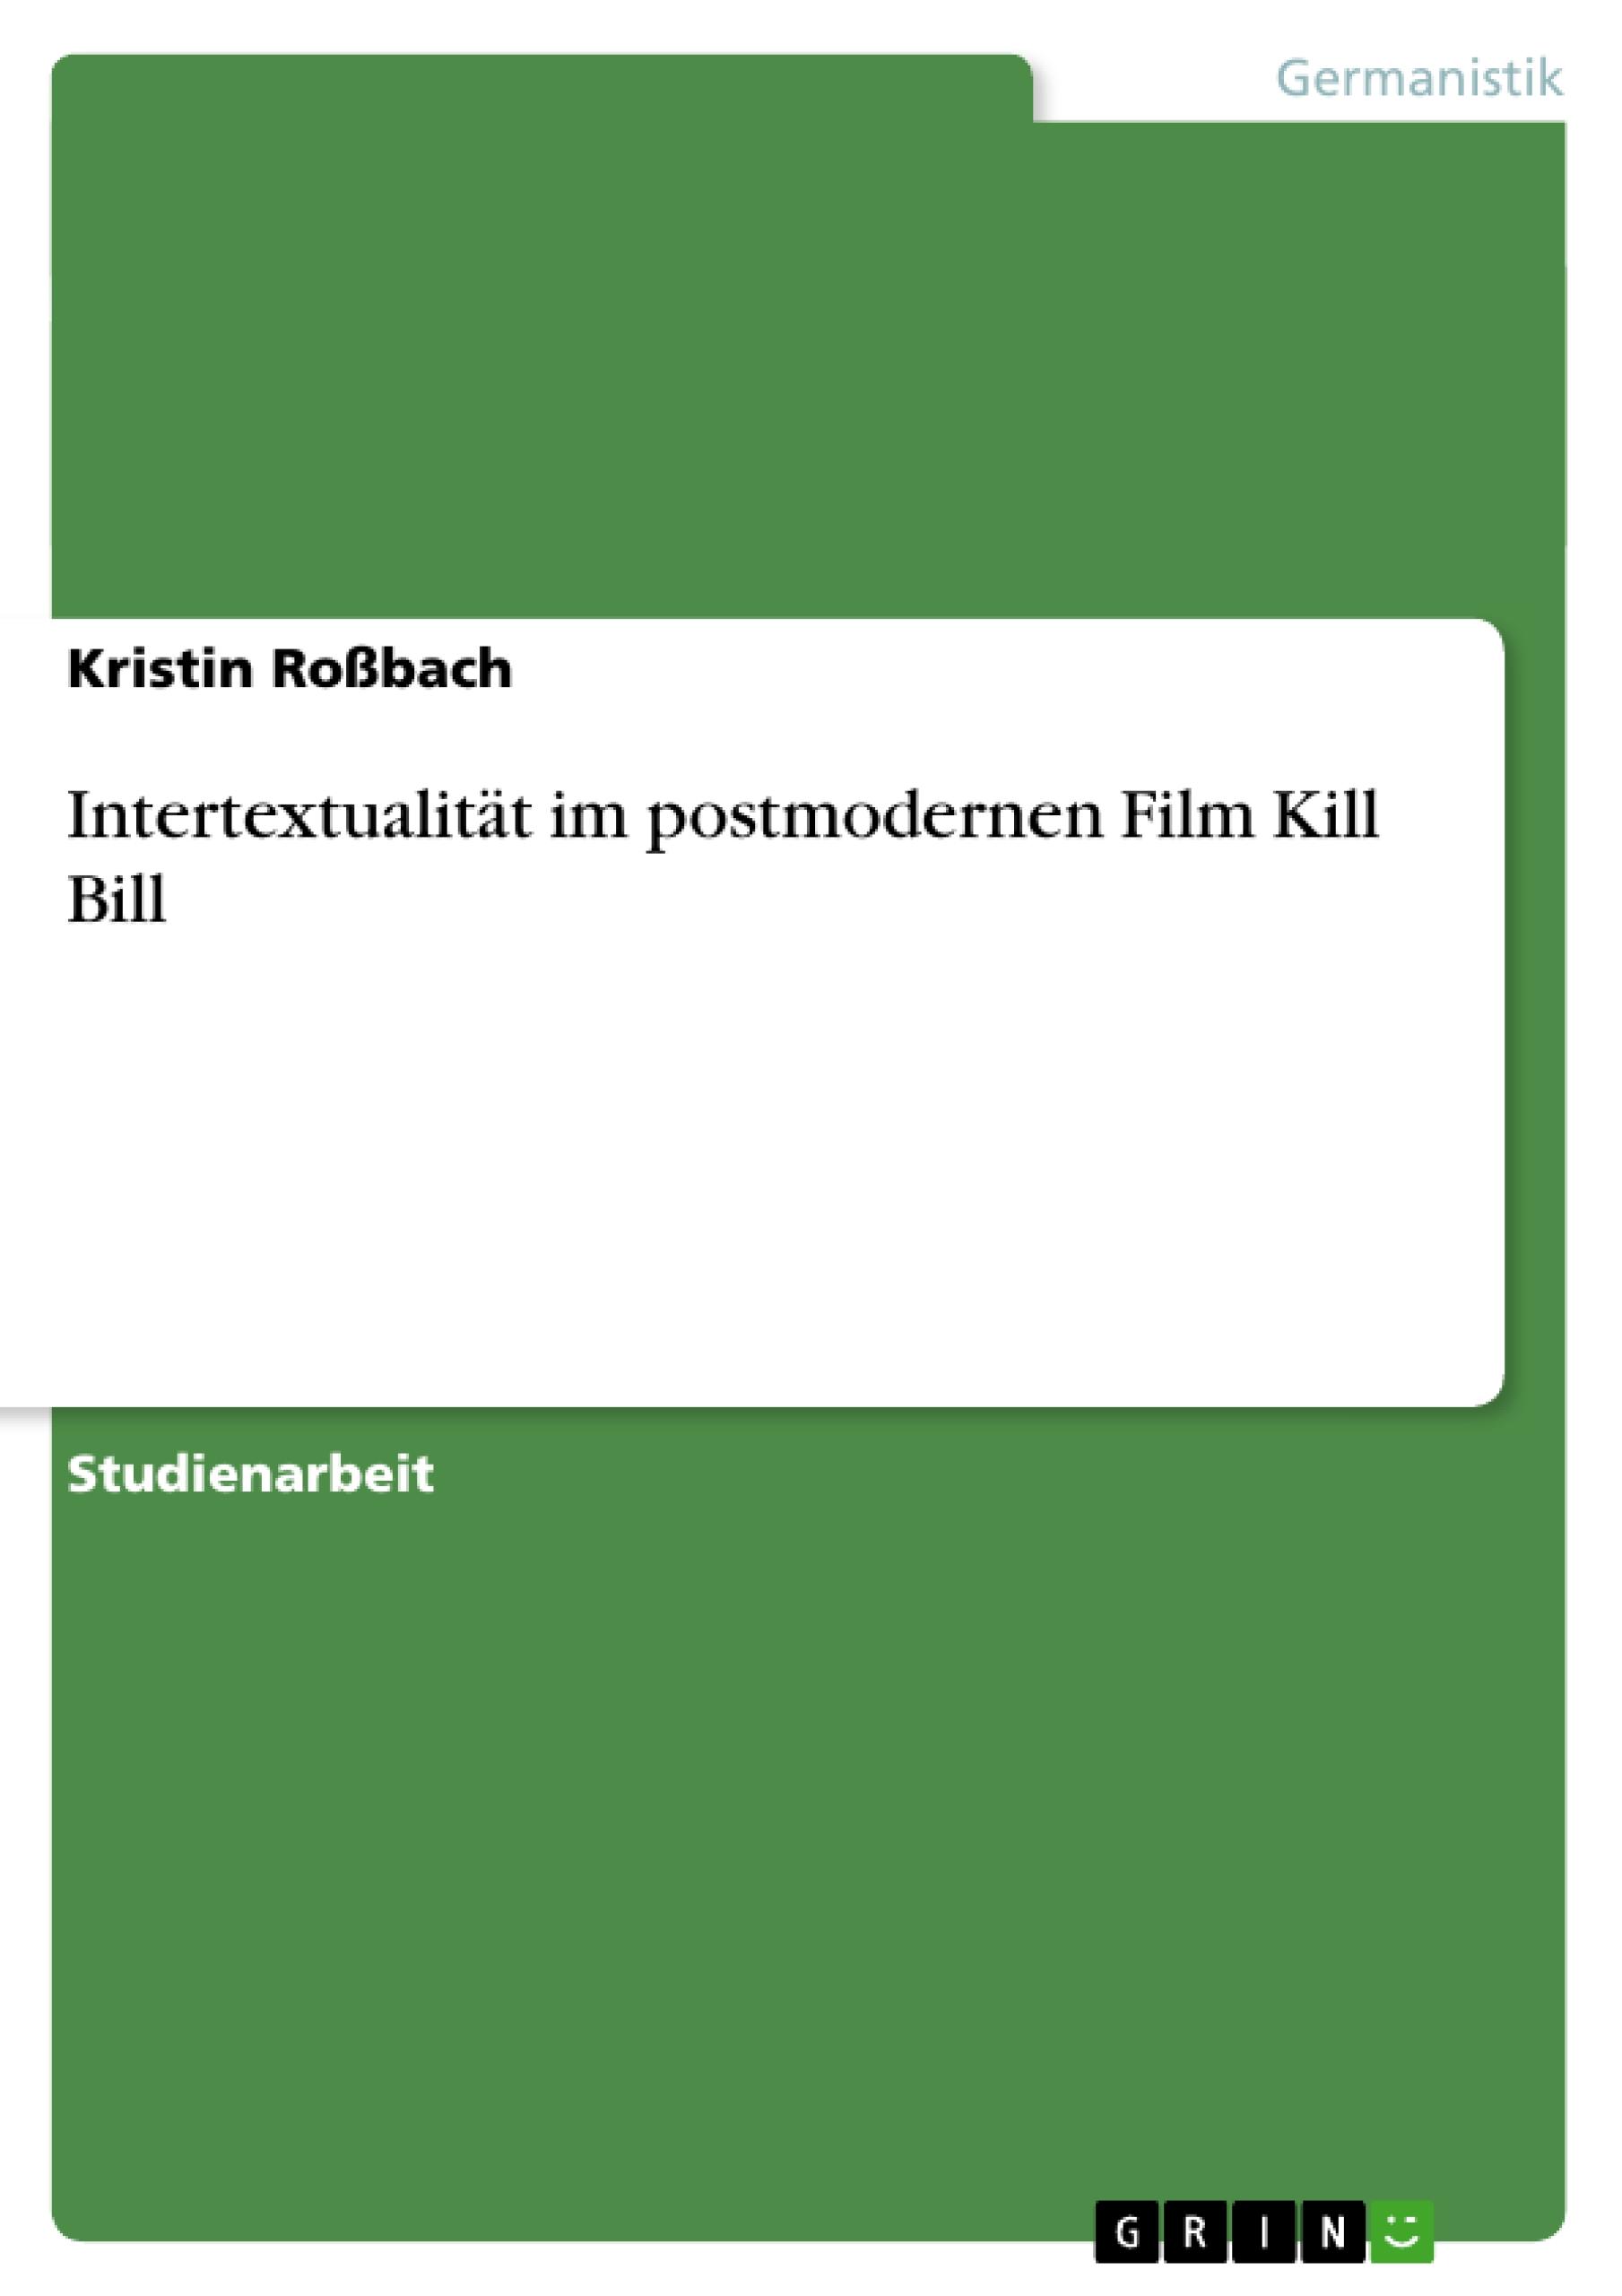 Intertextualitaet im postmodernen Film Kill Bill - RoÃŸbach, Kristin